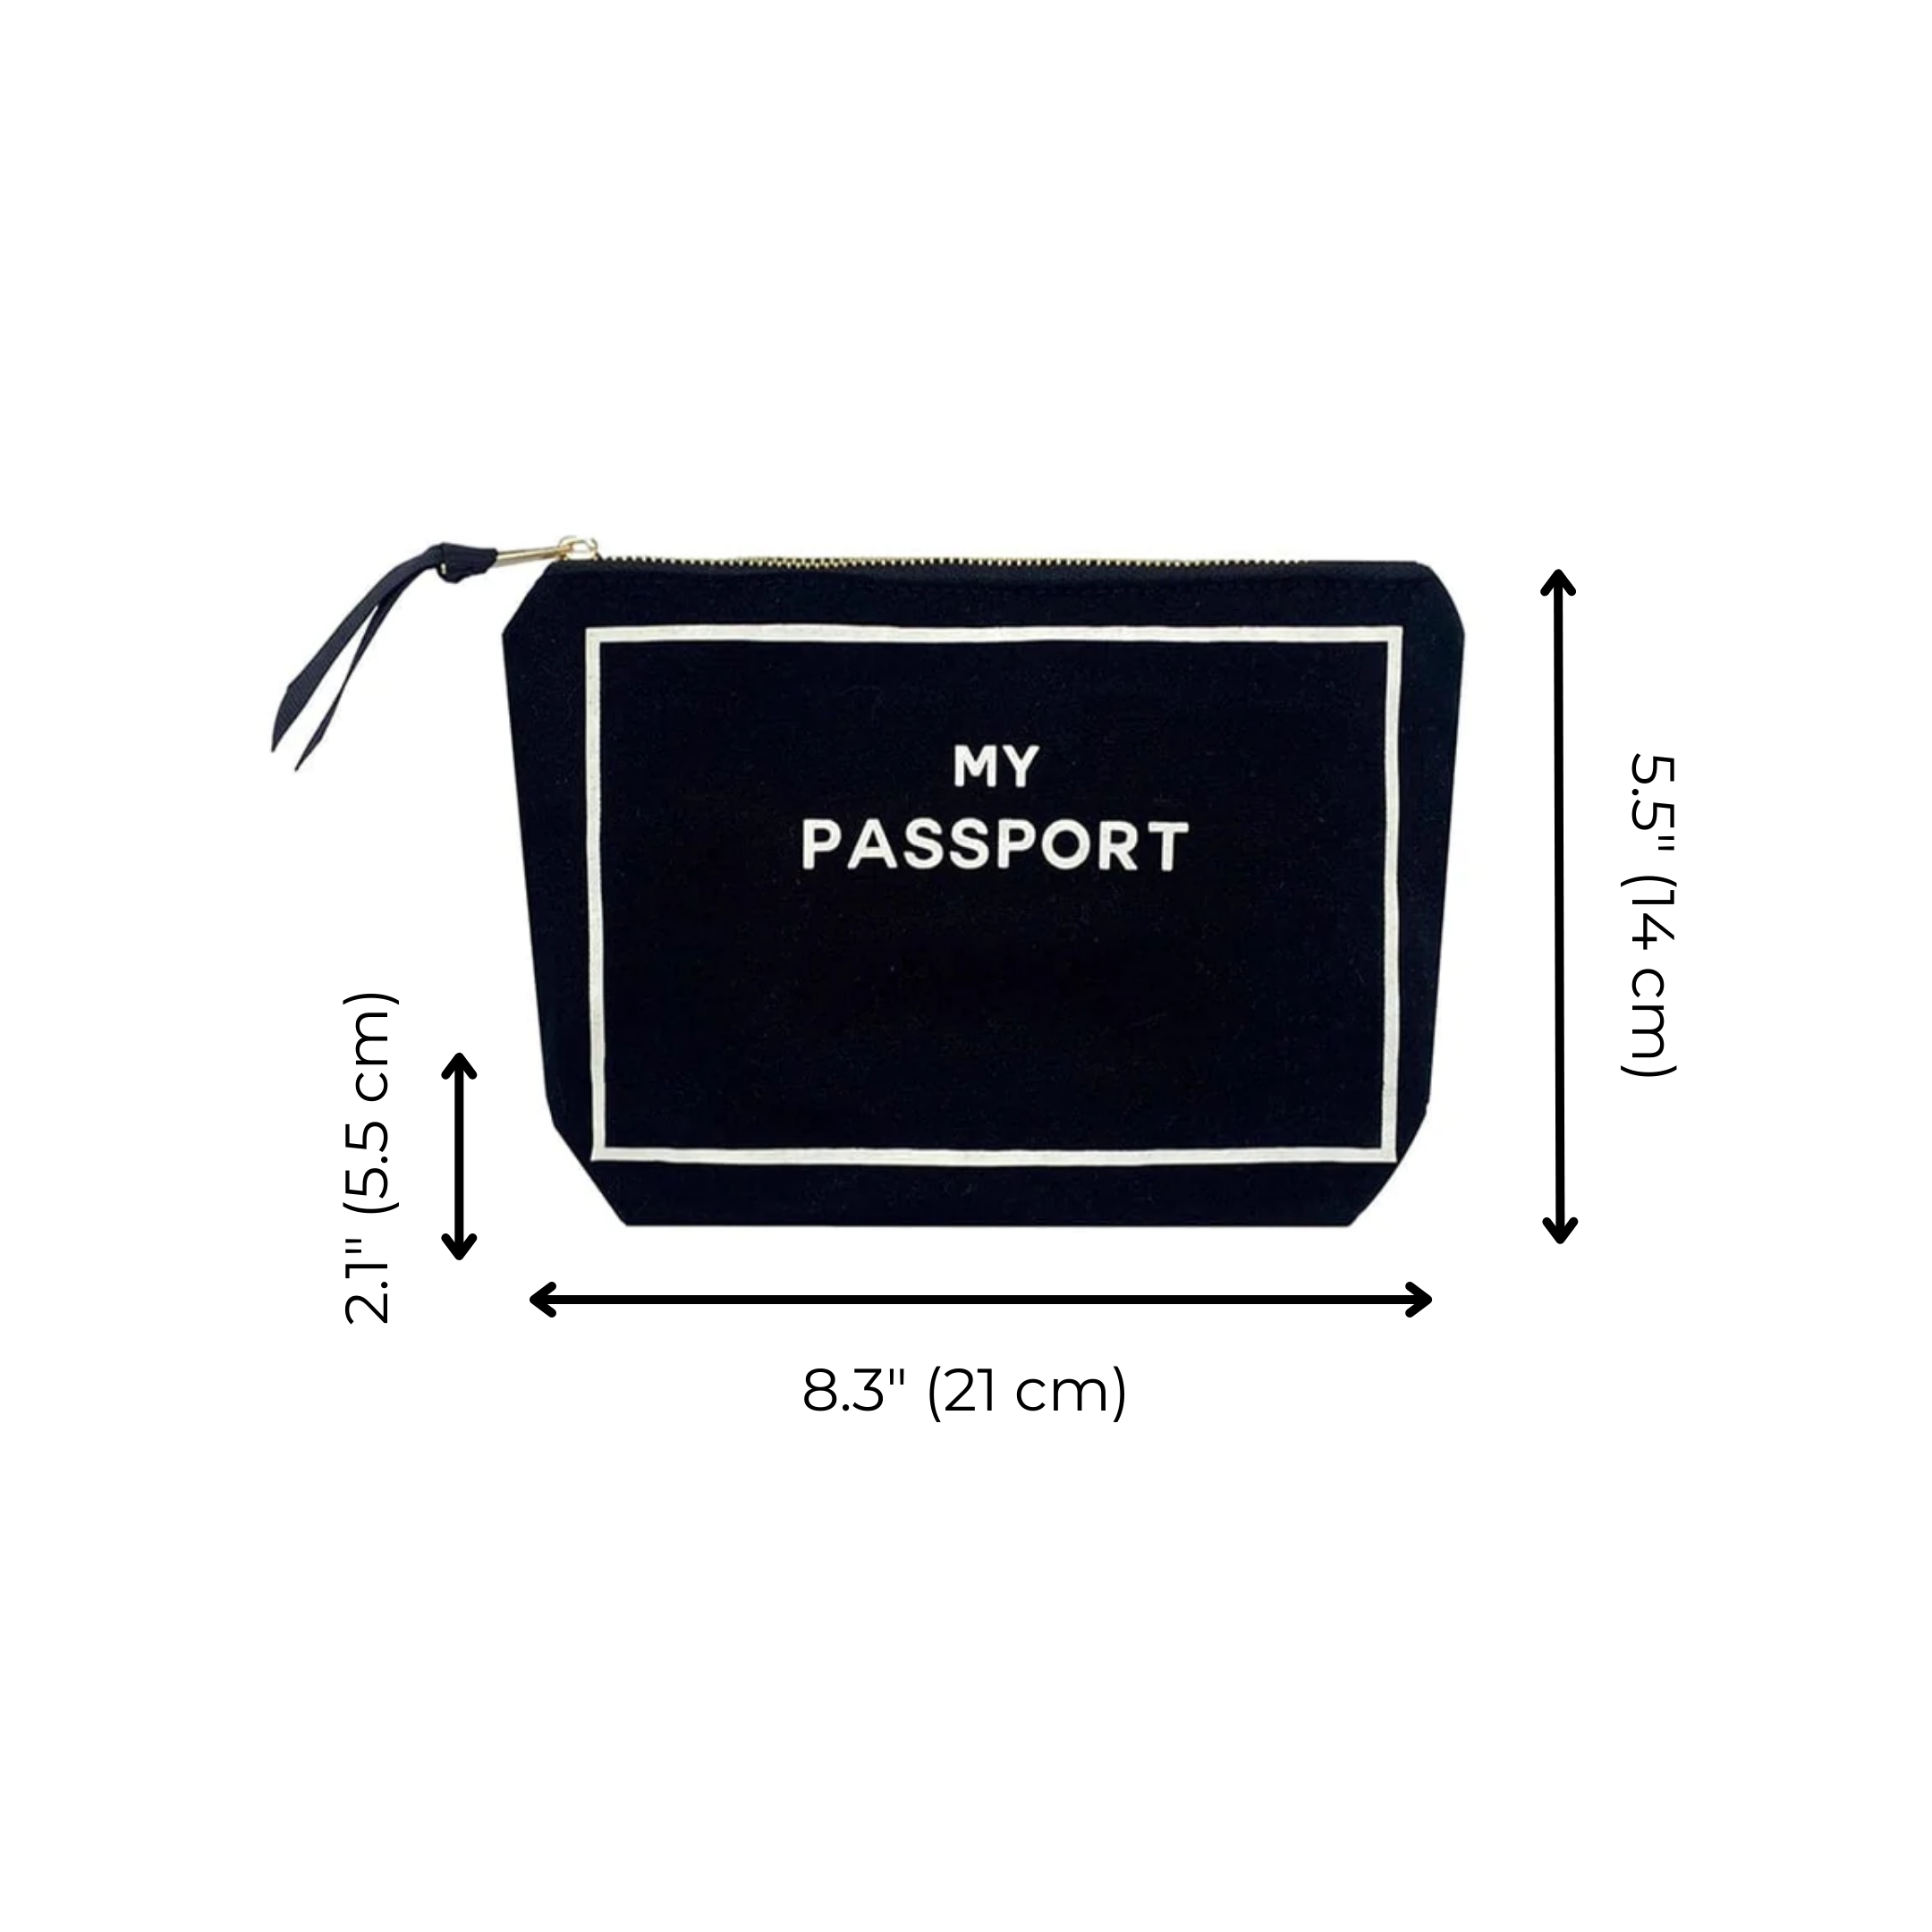 Passport Pouch, Black | Bag-all